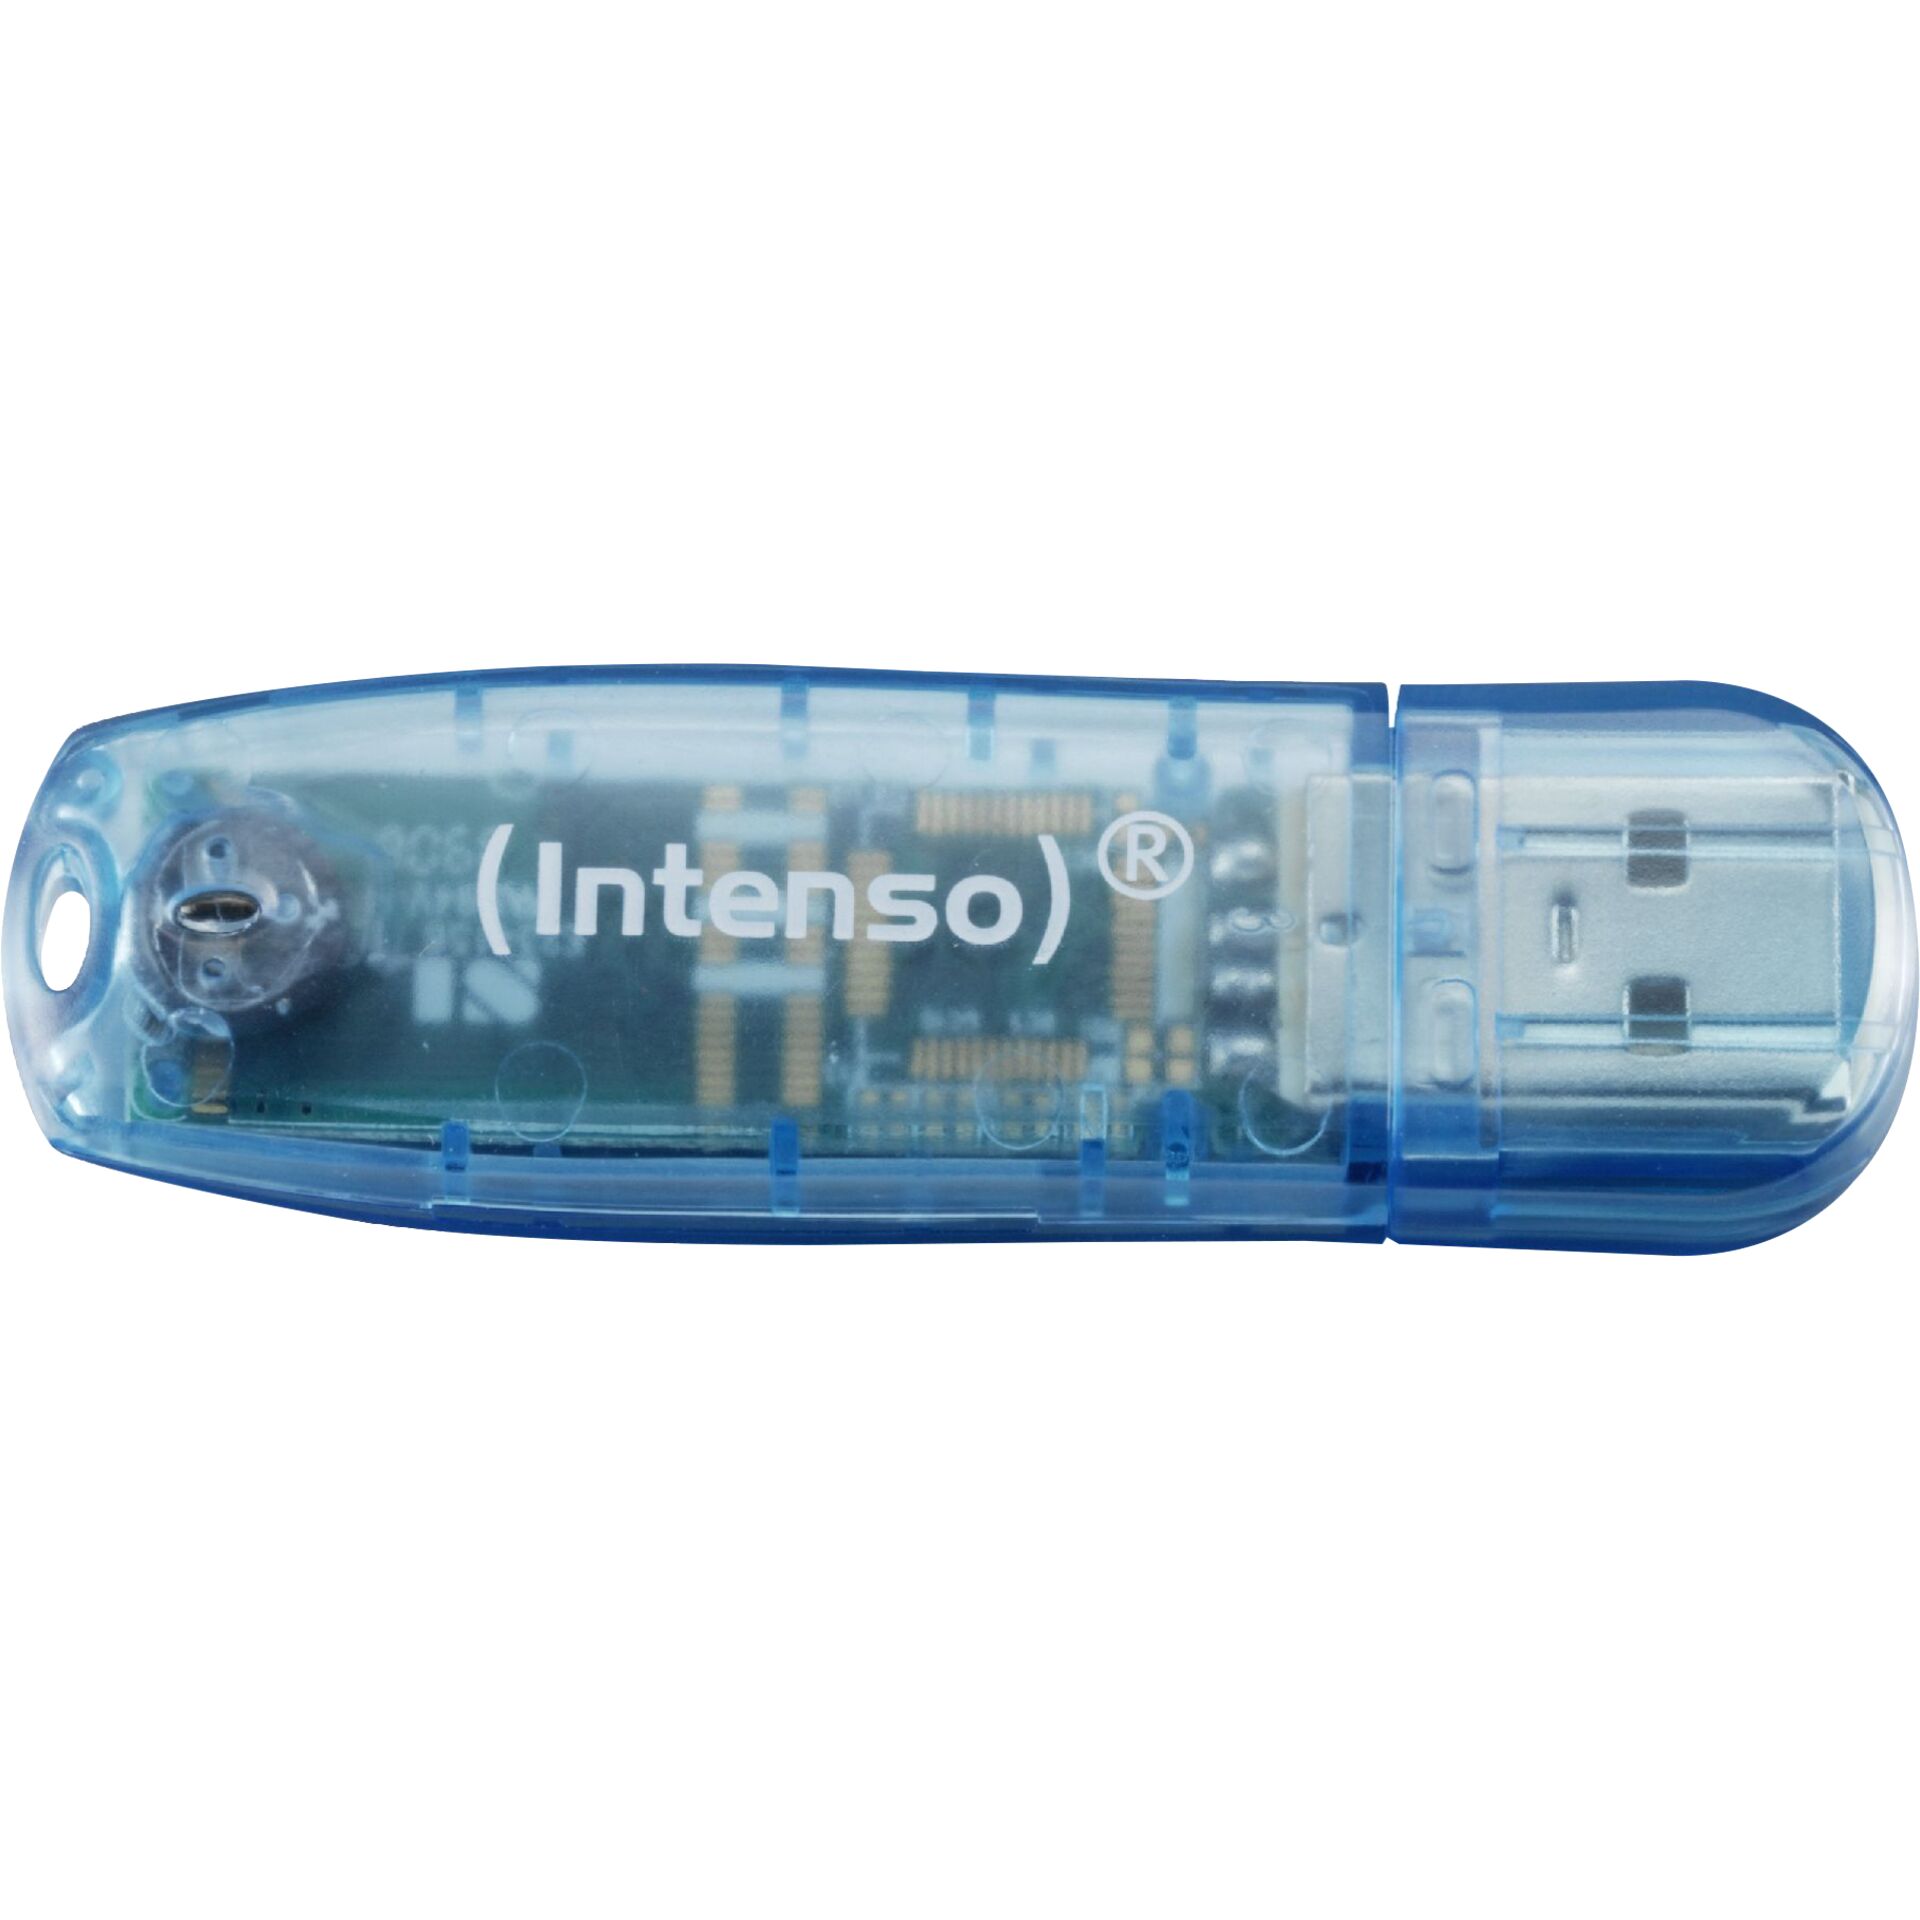 4 GB Intenso Rainbow Line blau USB 2.0 Stick lesen: 28MB/s, schreiben: 6.5MB/s